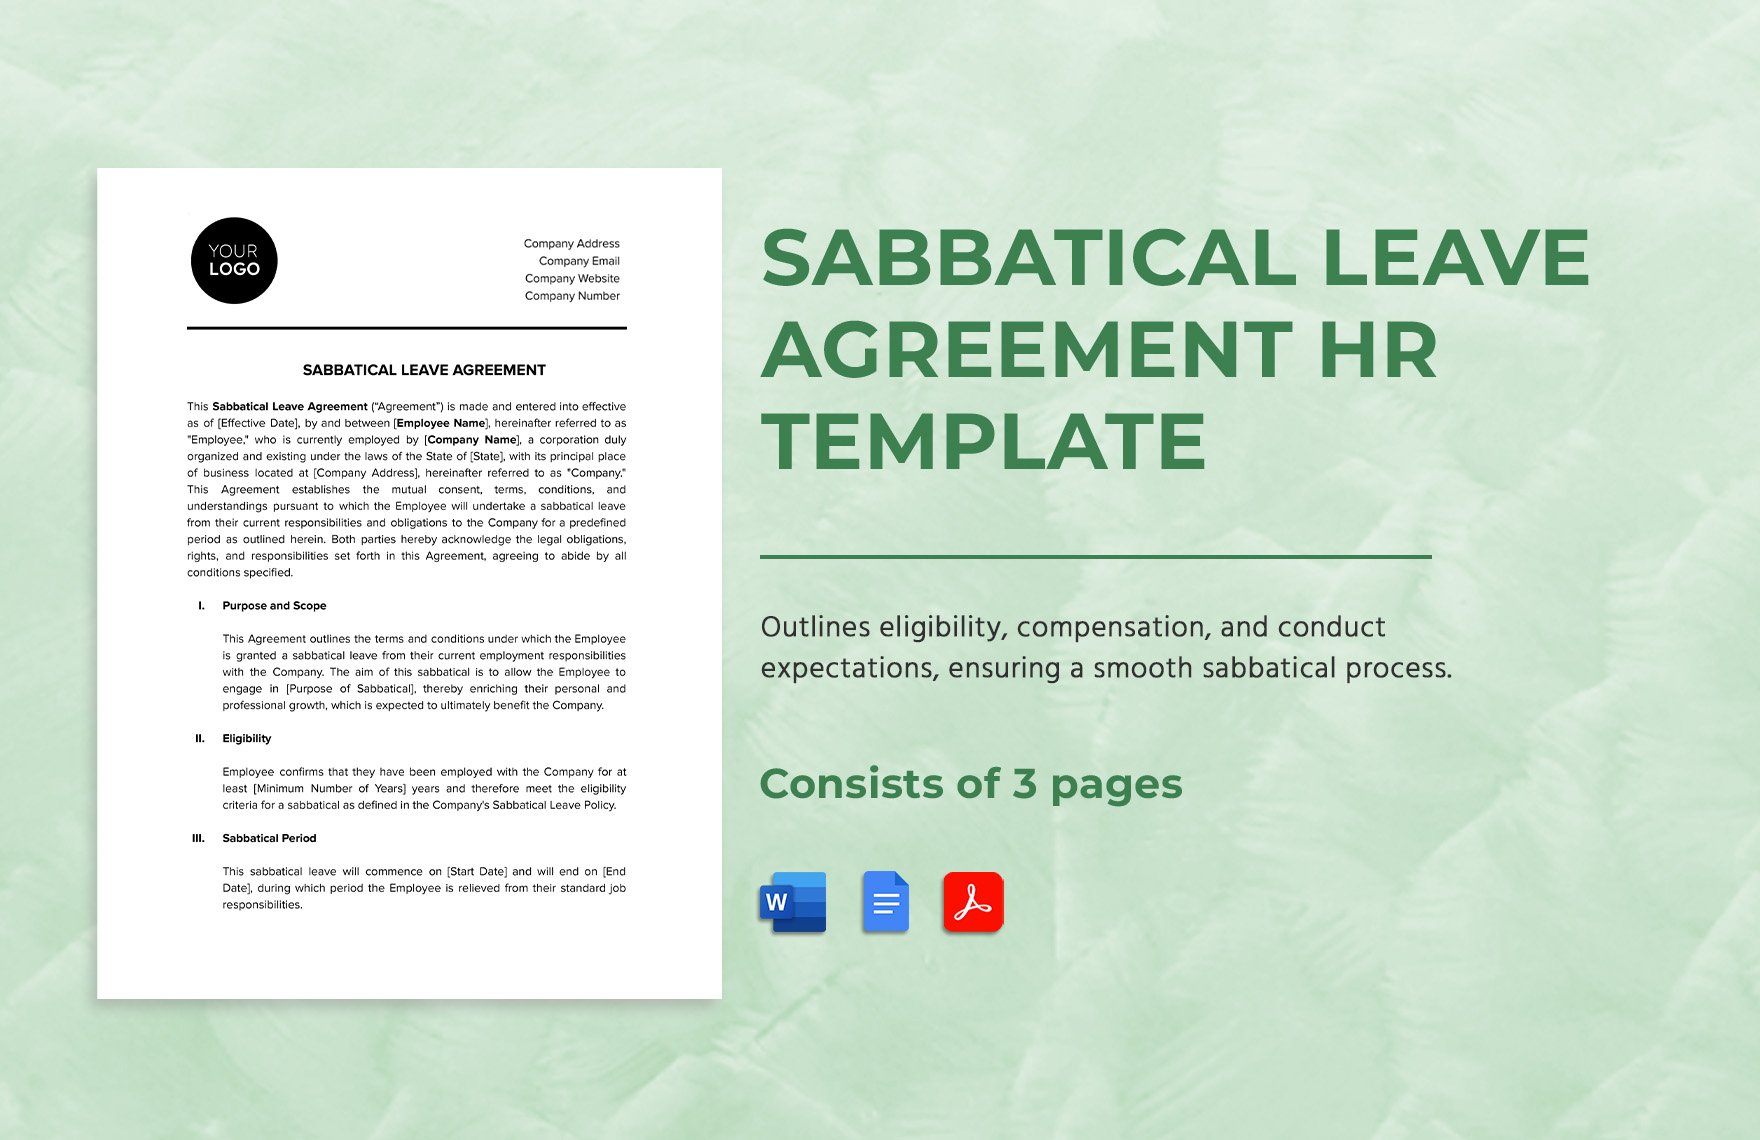 Sabbatical Leave Agreement HR Template in Word, Google Docs, PDF